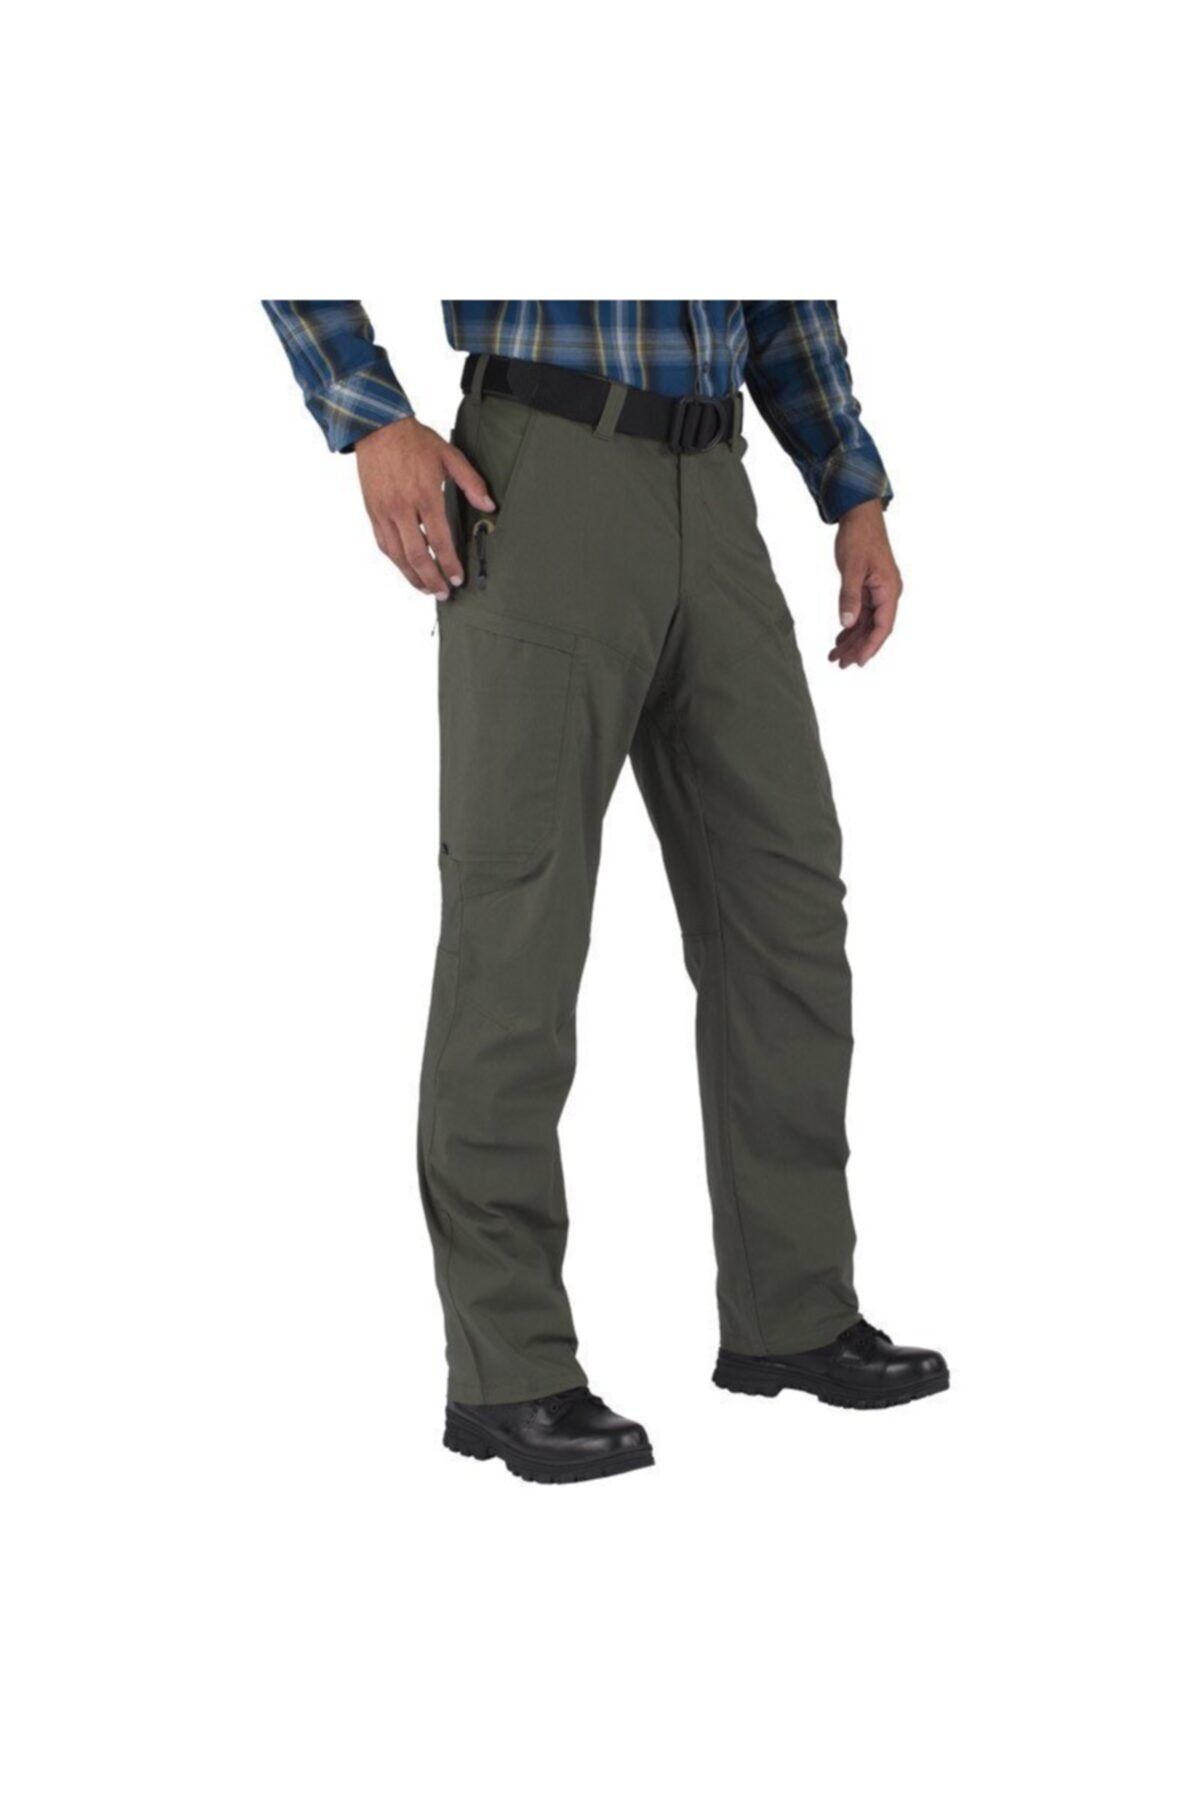 5.11 Tactical Erkek Haki Yeşil Apex Pantolon